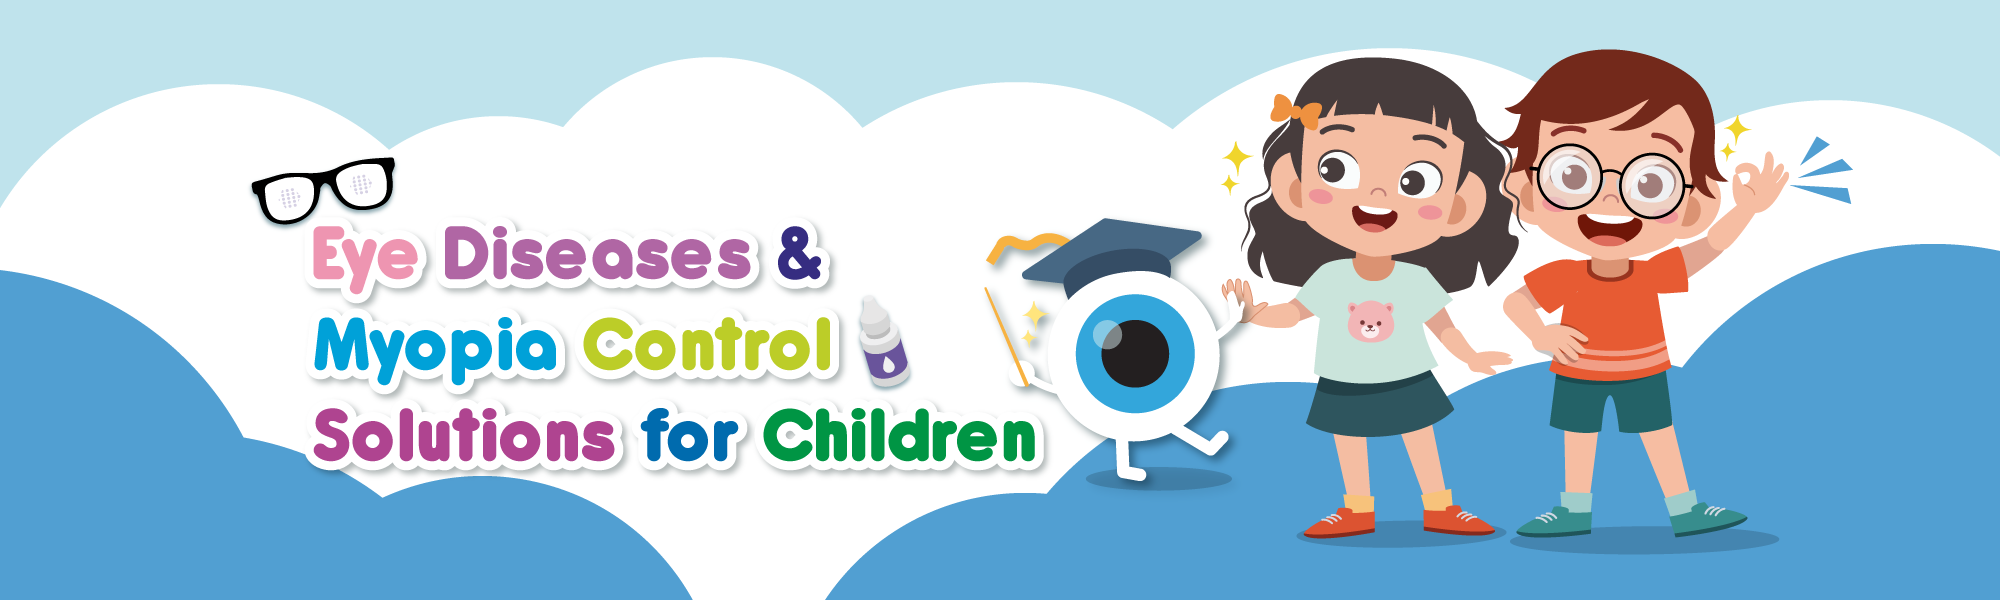 Myopia Control for Children